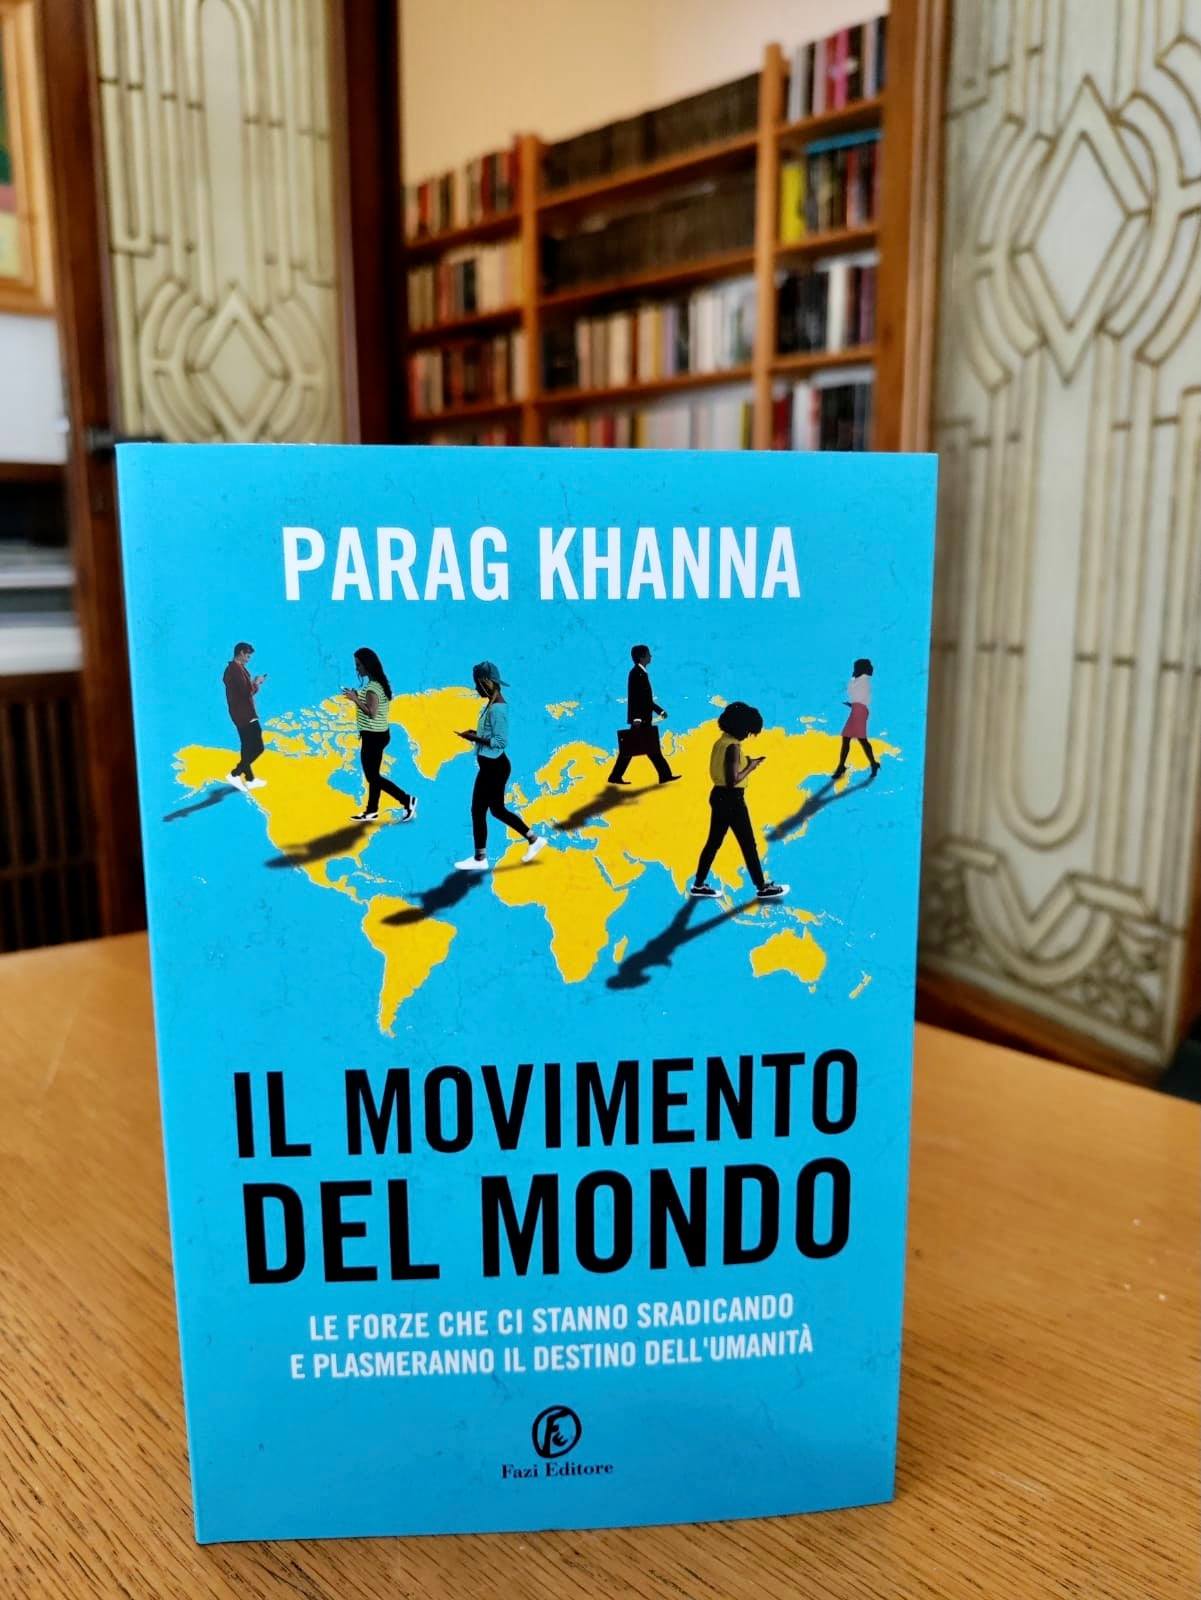 Launch of MOVE – Italian Version